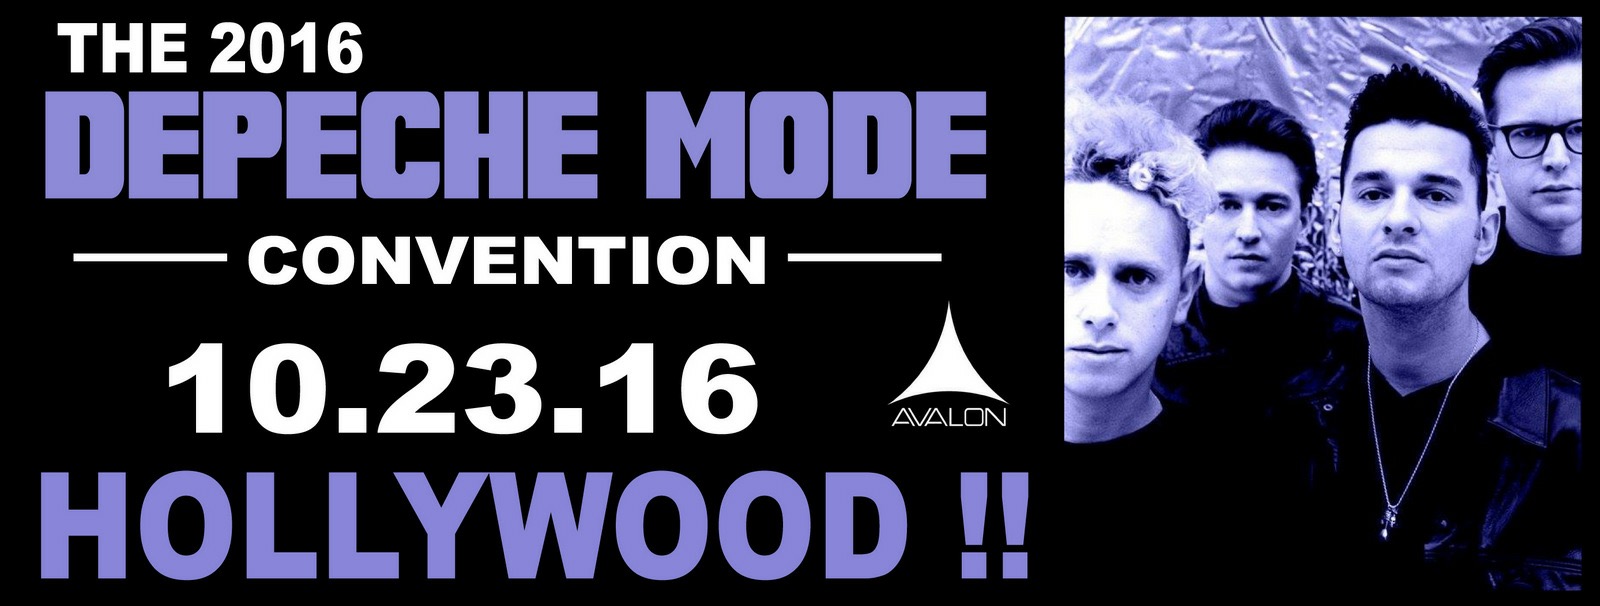 Depeche Mode Convention